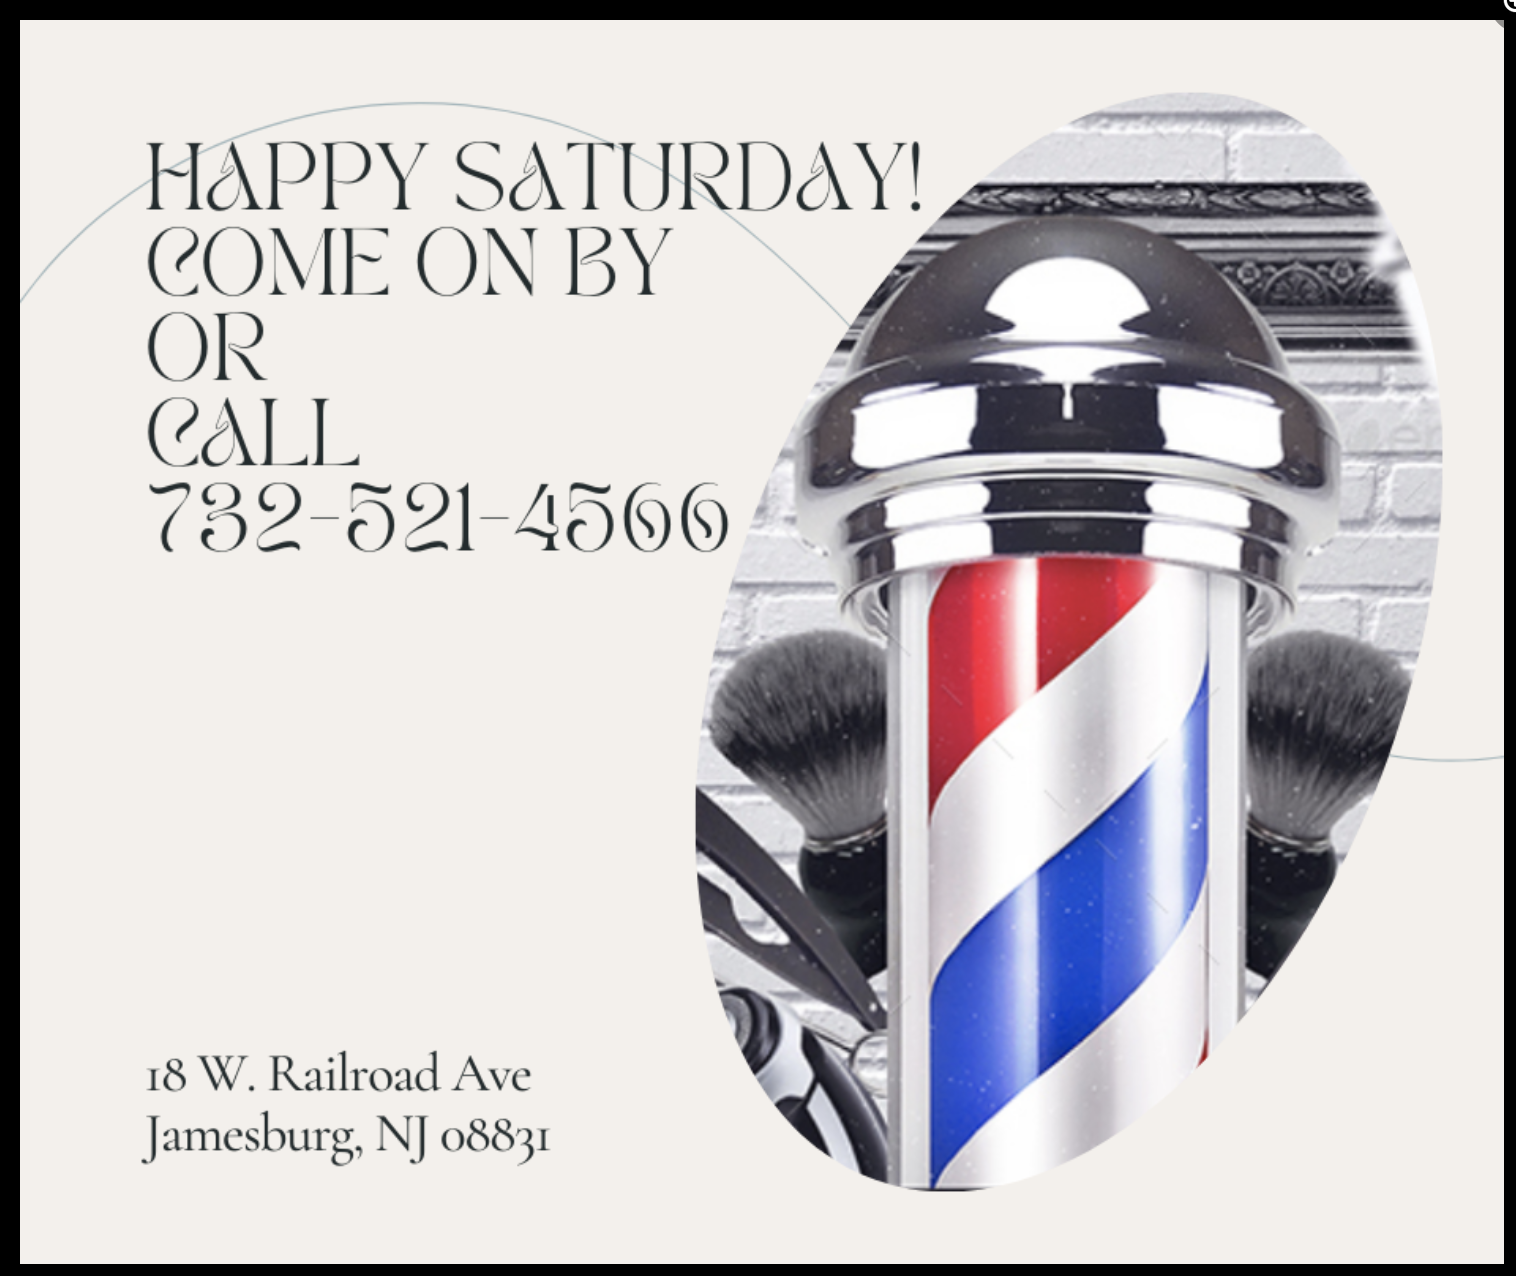 John's Barber & Styling 18 W Railroad Ave, Jamesburg New Jersey 08831